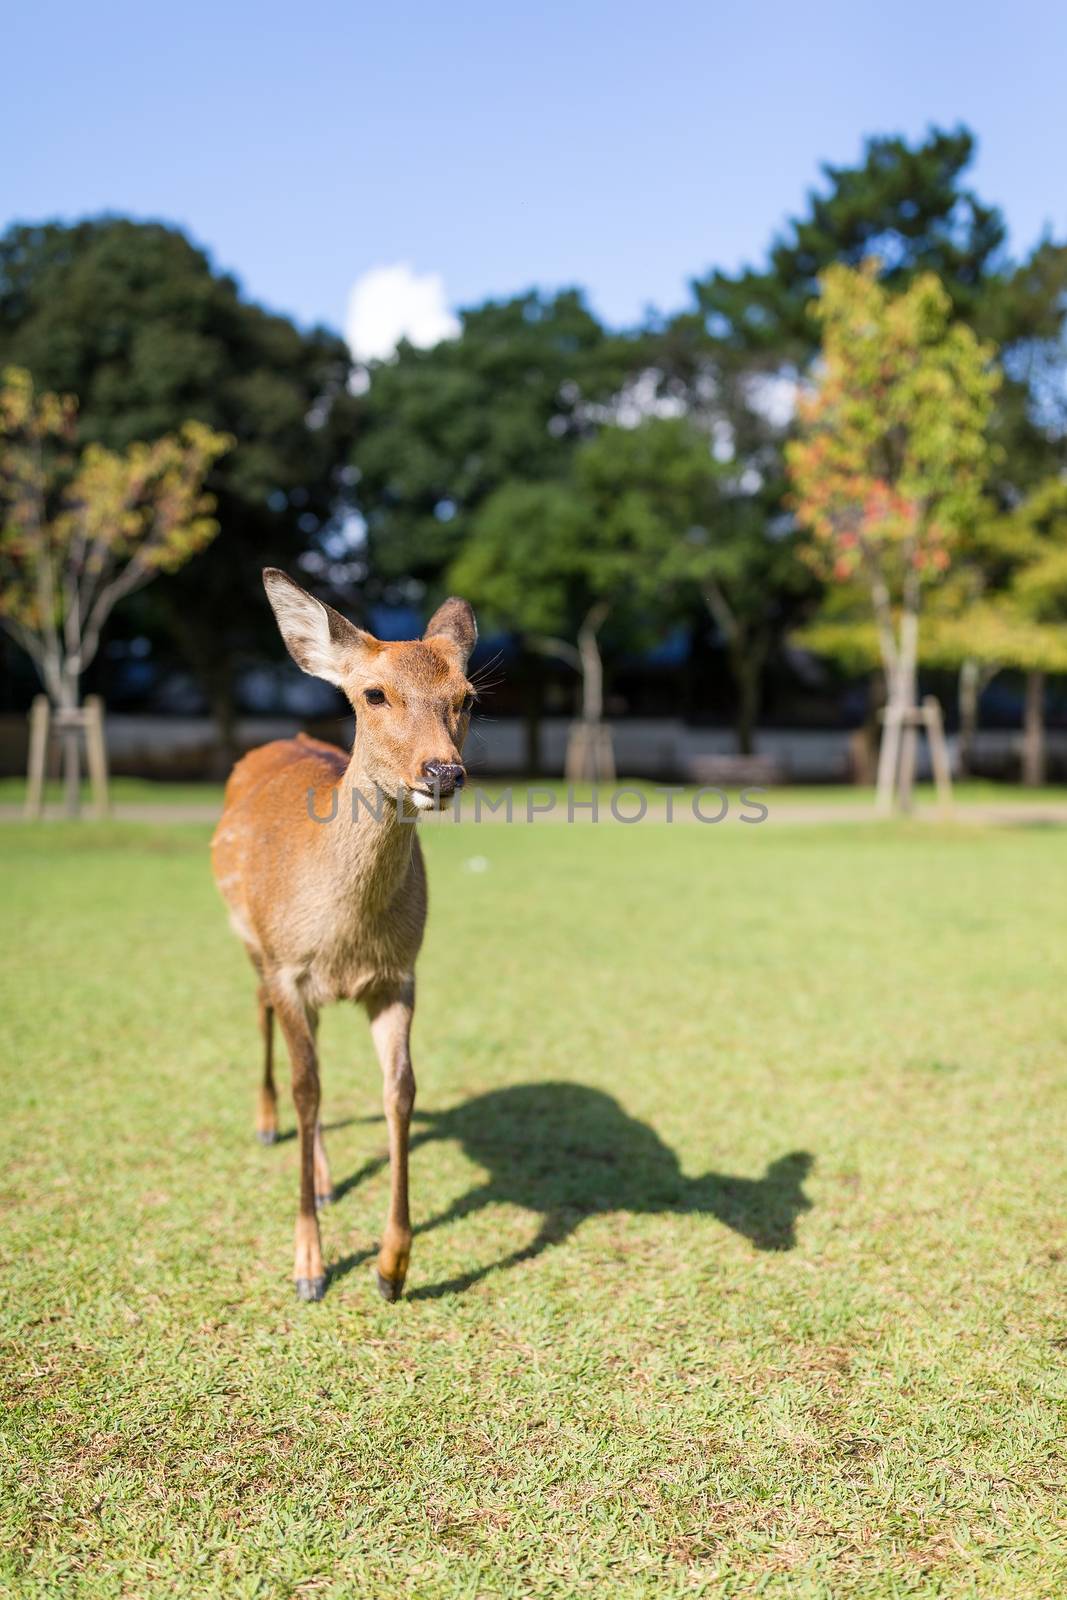 Lovely Deer walking in a park by leungchopan